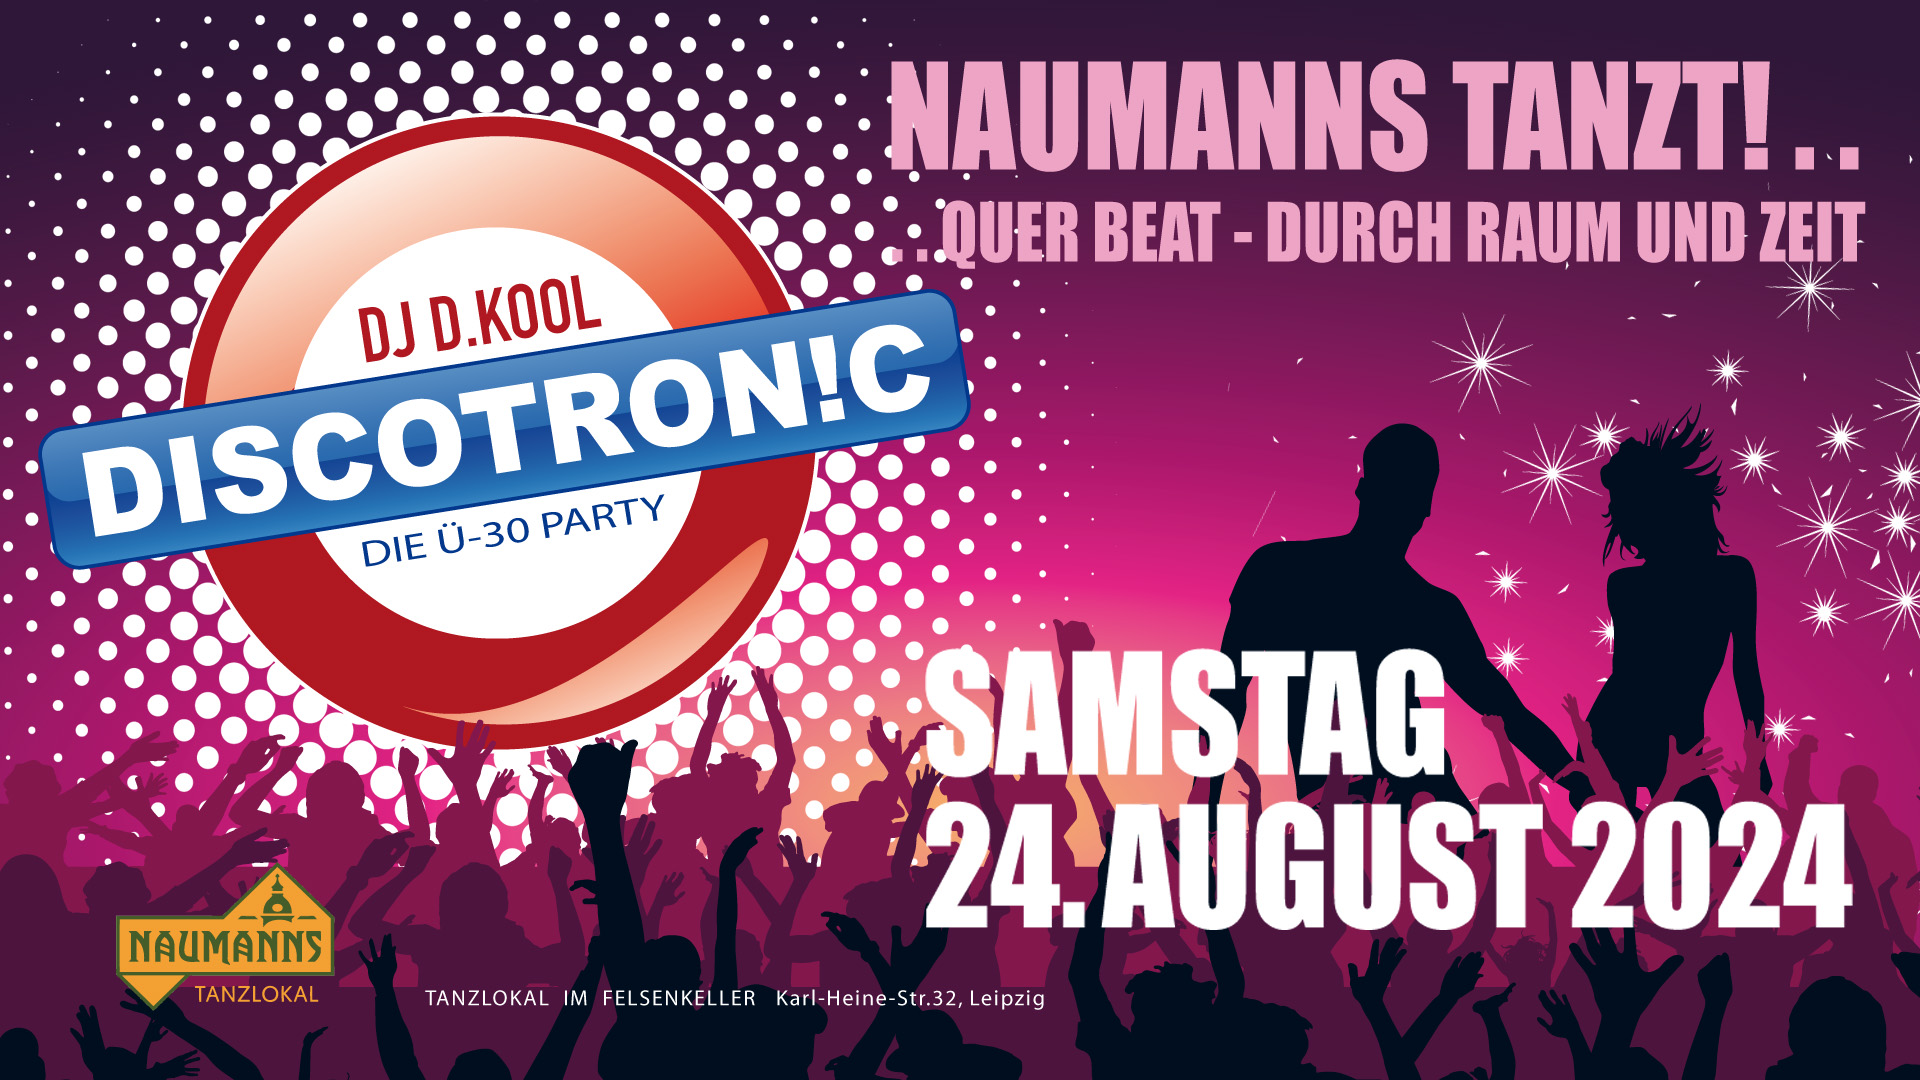 Naumanns tanzt! - Discotronic ♥ Ü30 Party